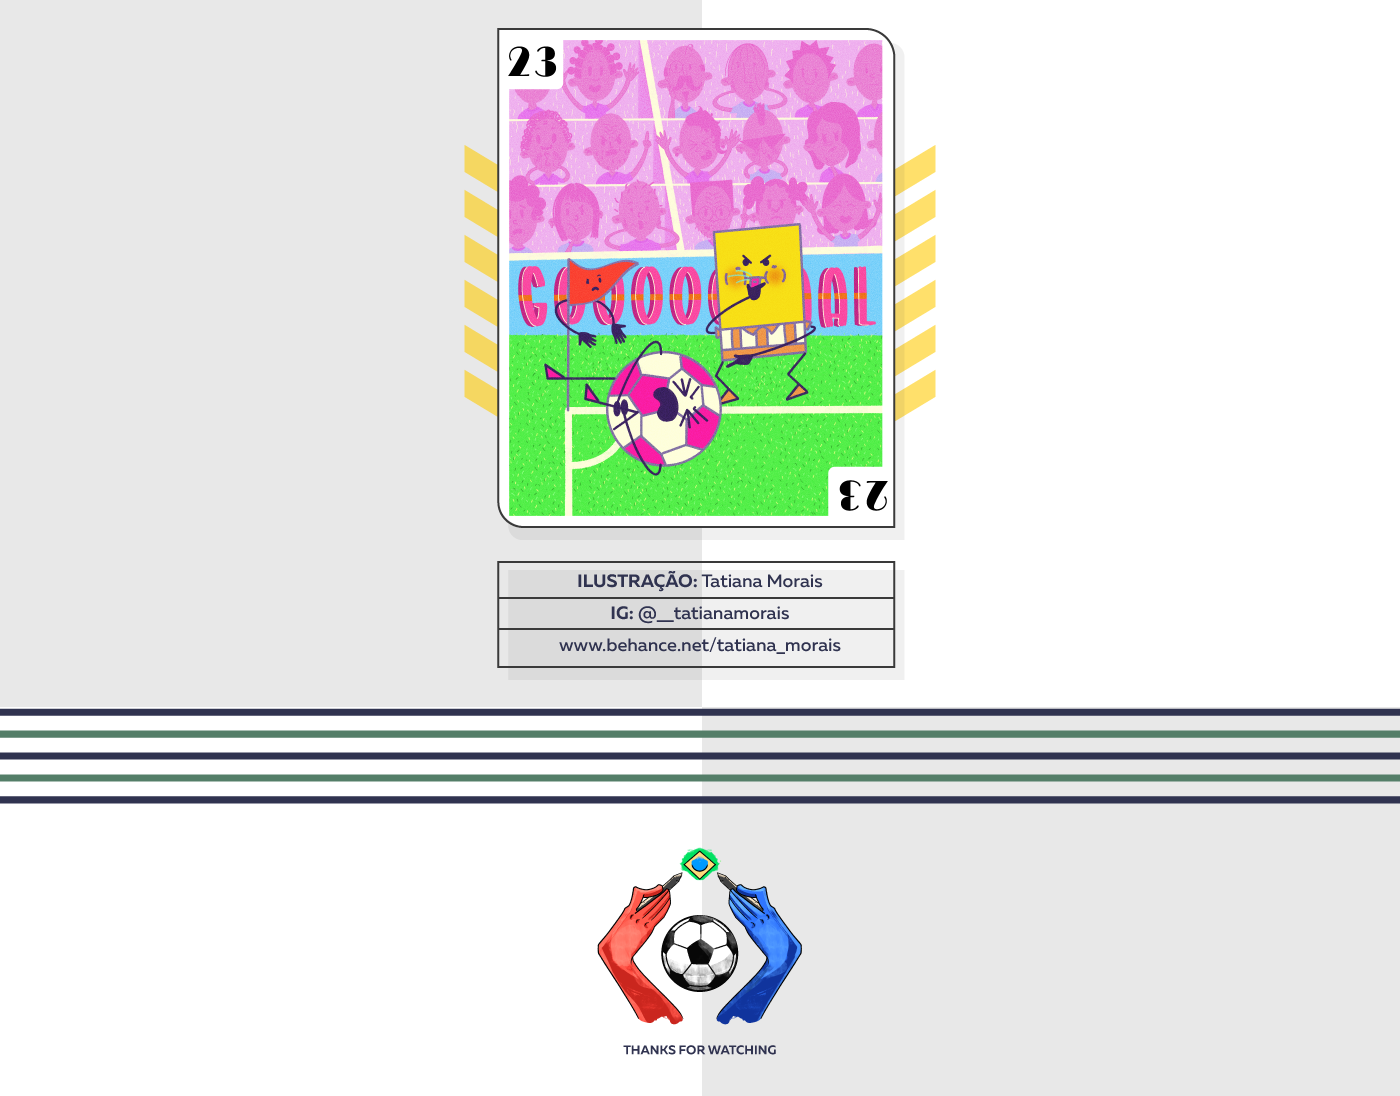 Album design Digital Art  FIFA football ILLUSTRATION  Ilustração stickers world cup WorldCup